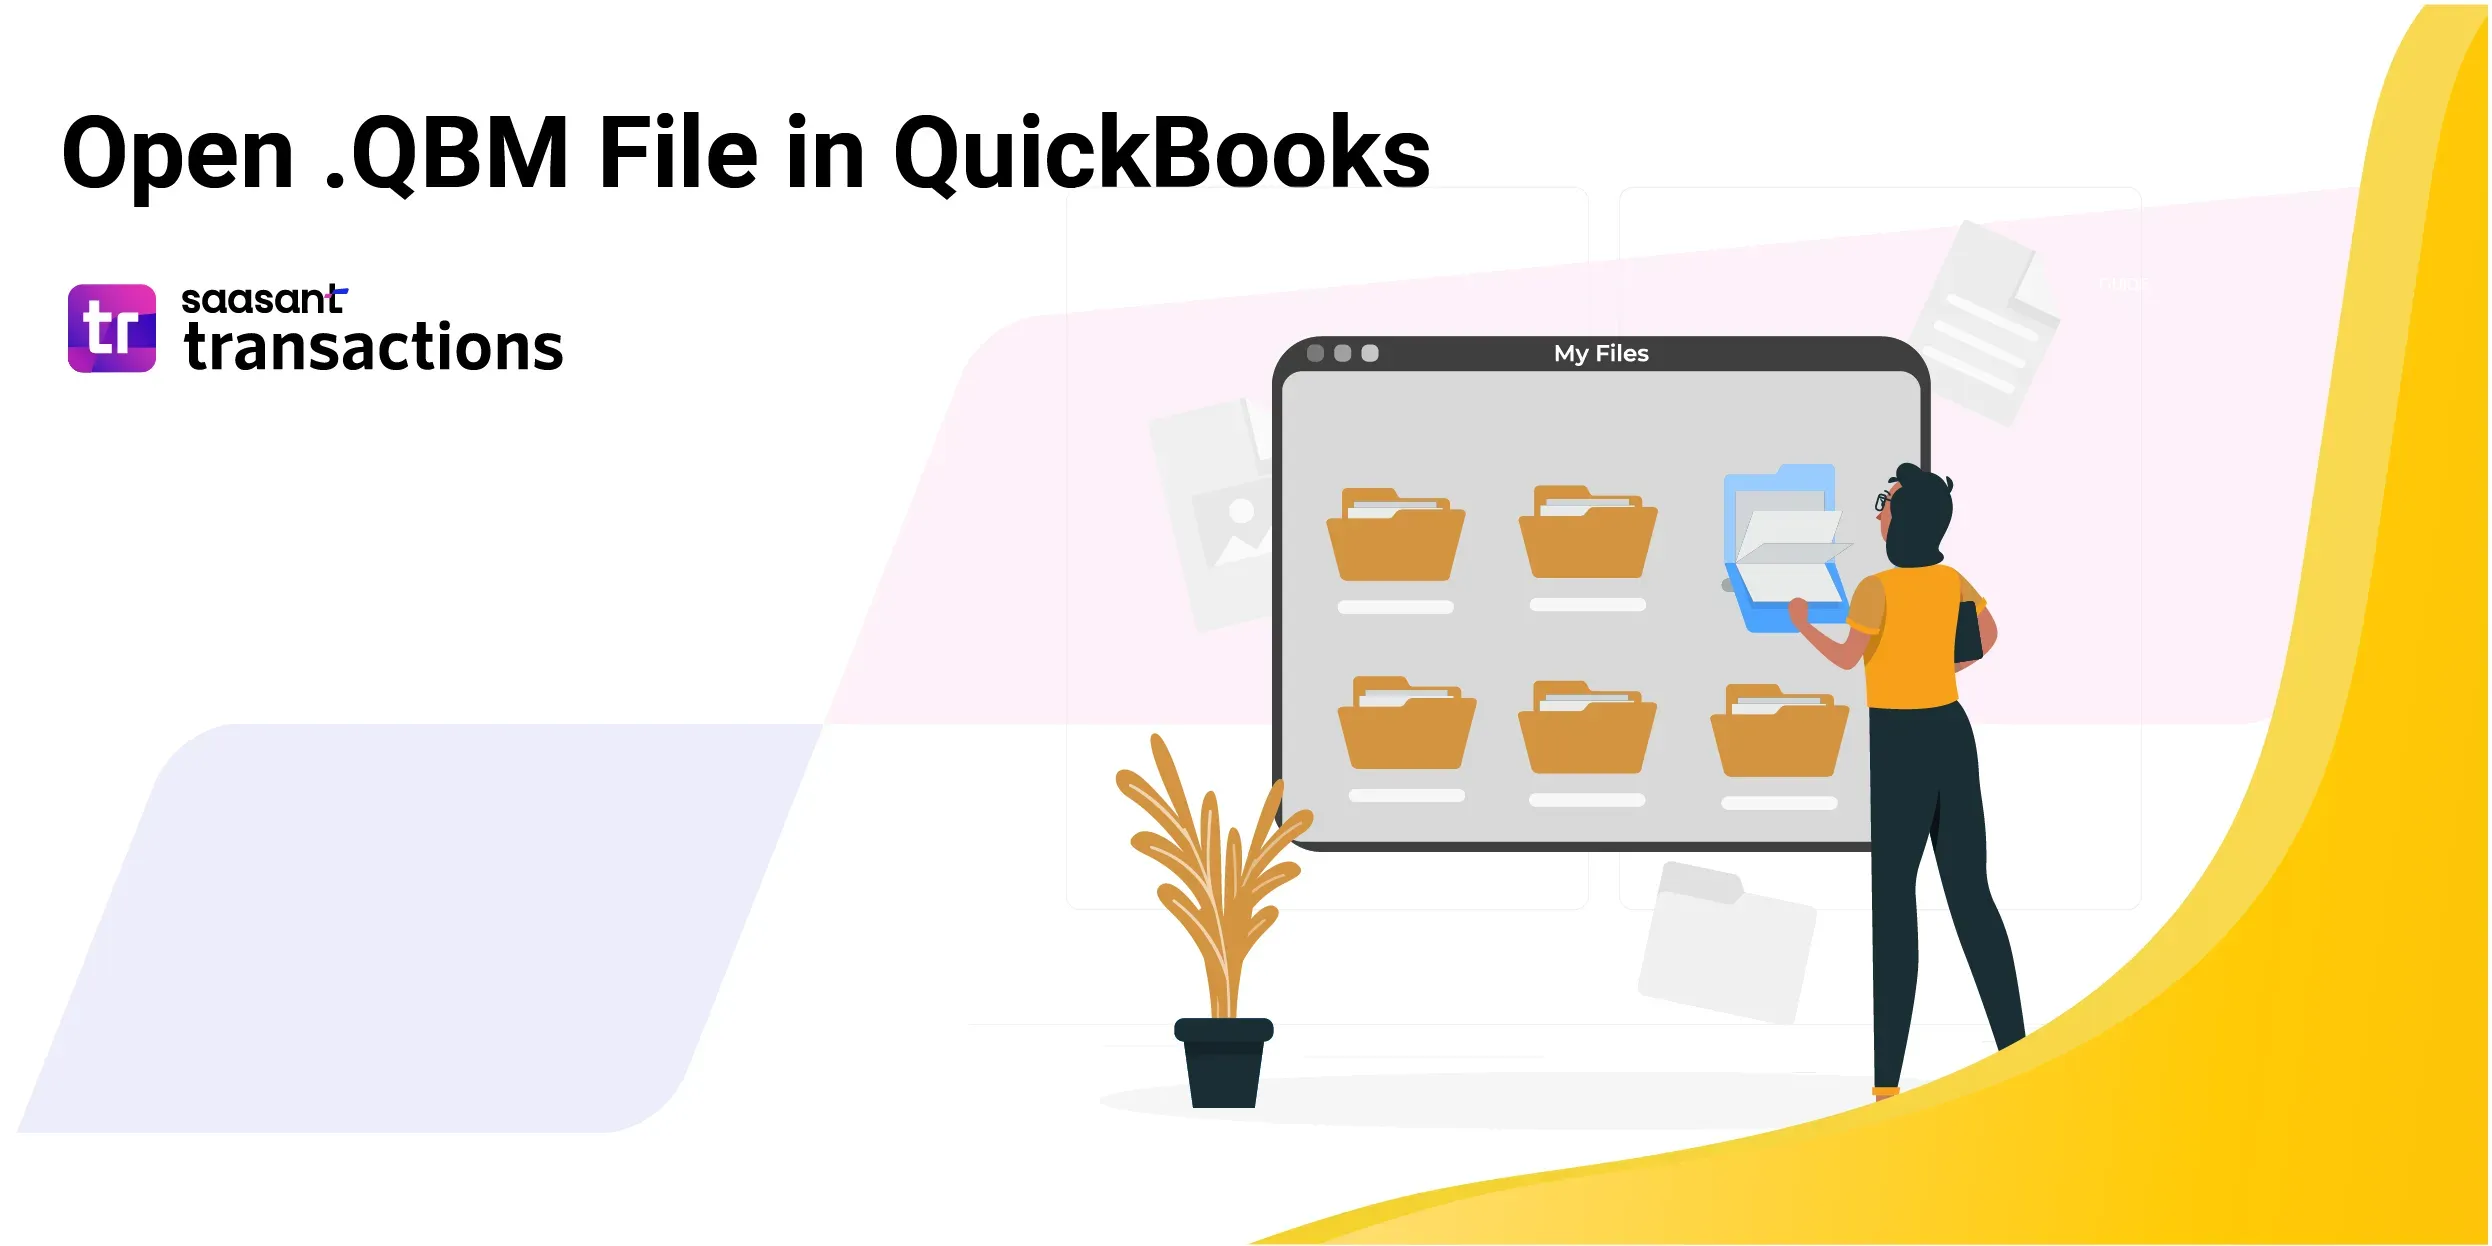 How to Open .QBM File in QuickBooks